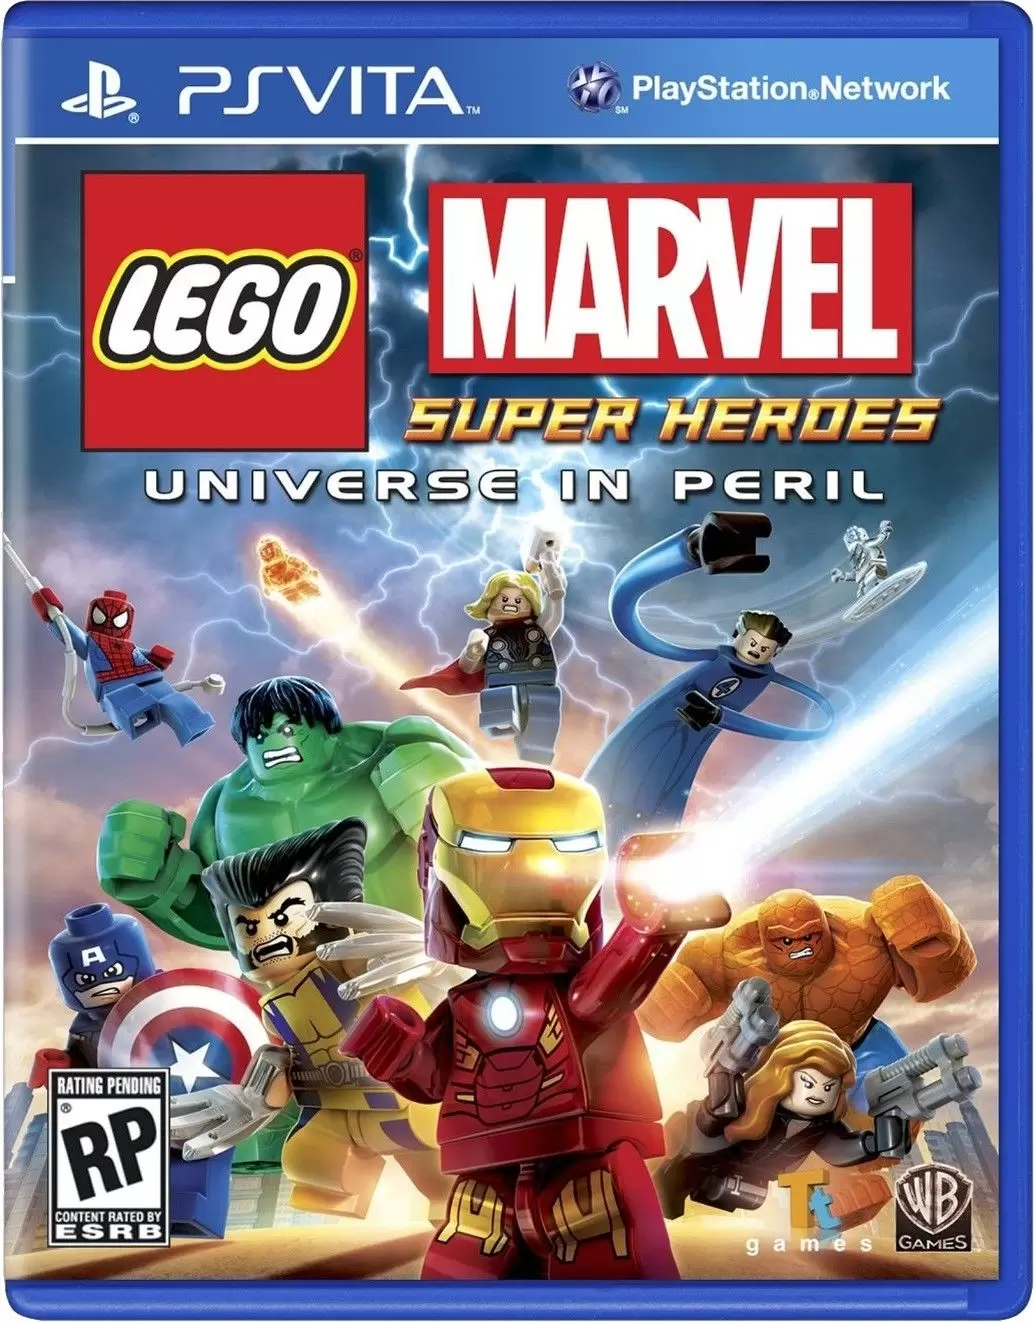 PS Vita Games - LEGO Marvel Super Heroes: Universe in Peril